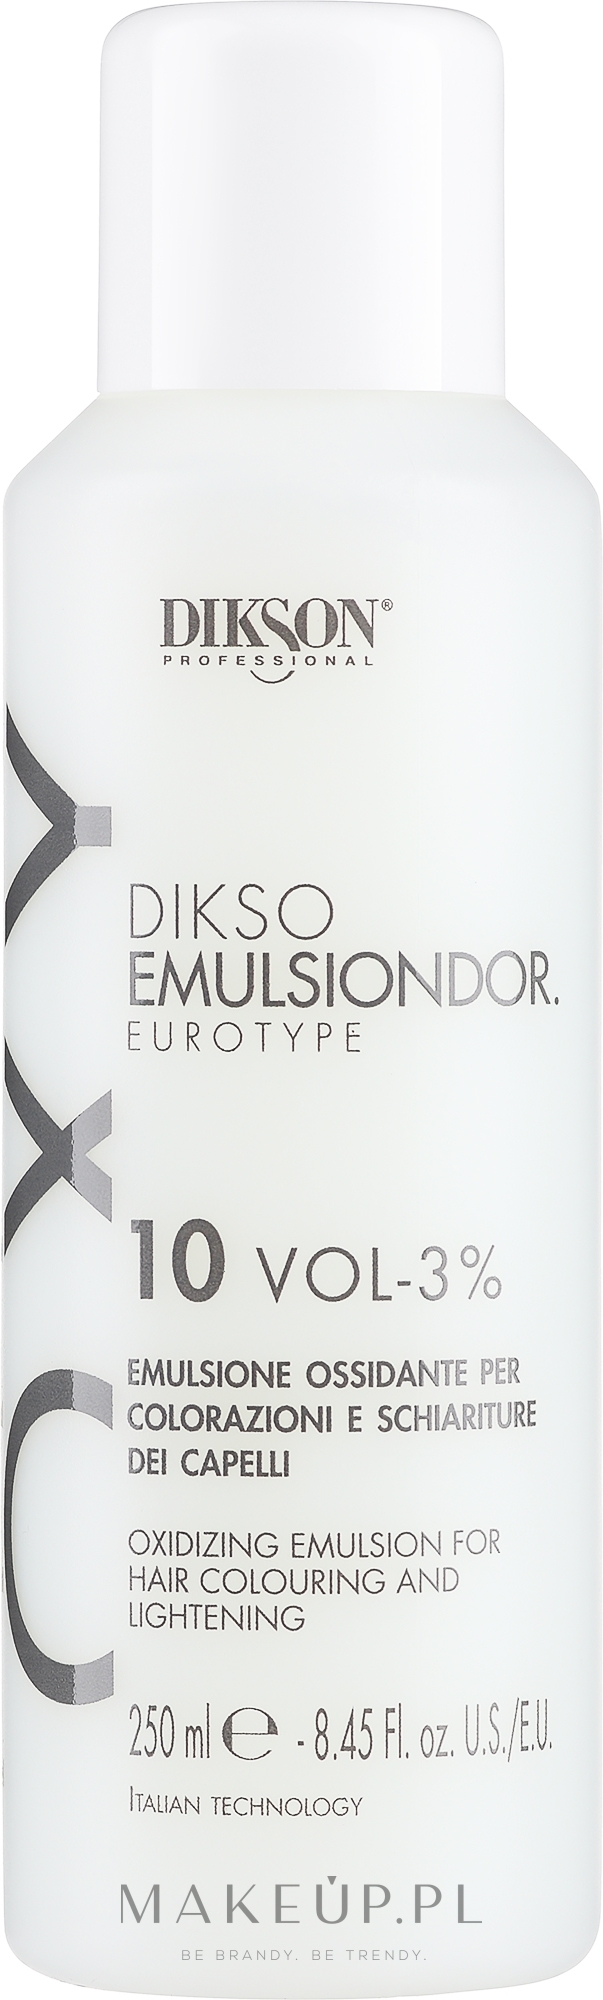 Oksykrem uniwersalny 3% - Dikson Tec Emulsiondor Eurotype 10 Volumi  — Zdjęcie 250 ml